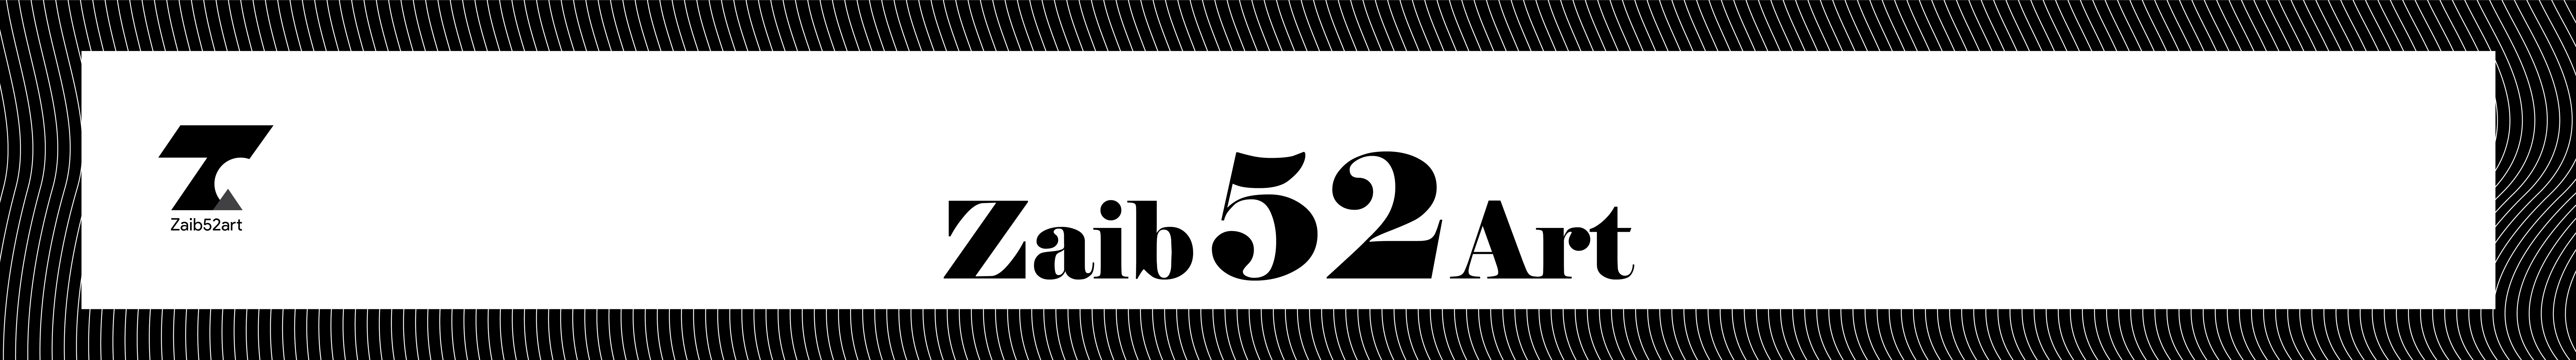 Zaib 52 Art's profile banner